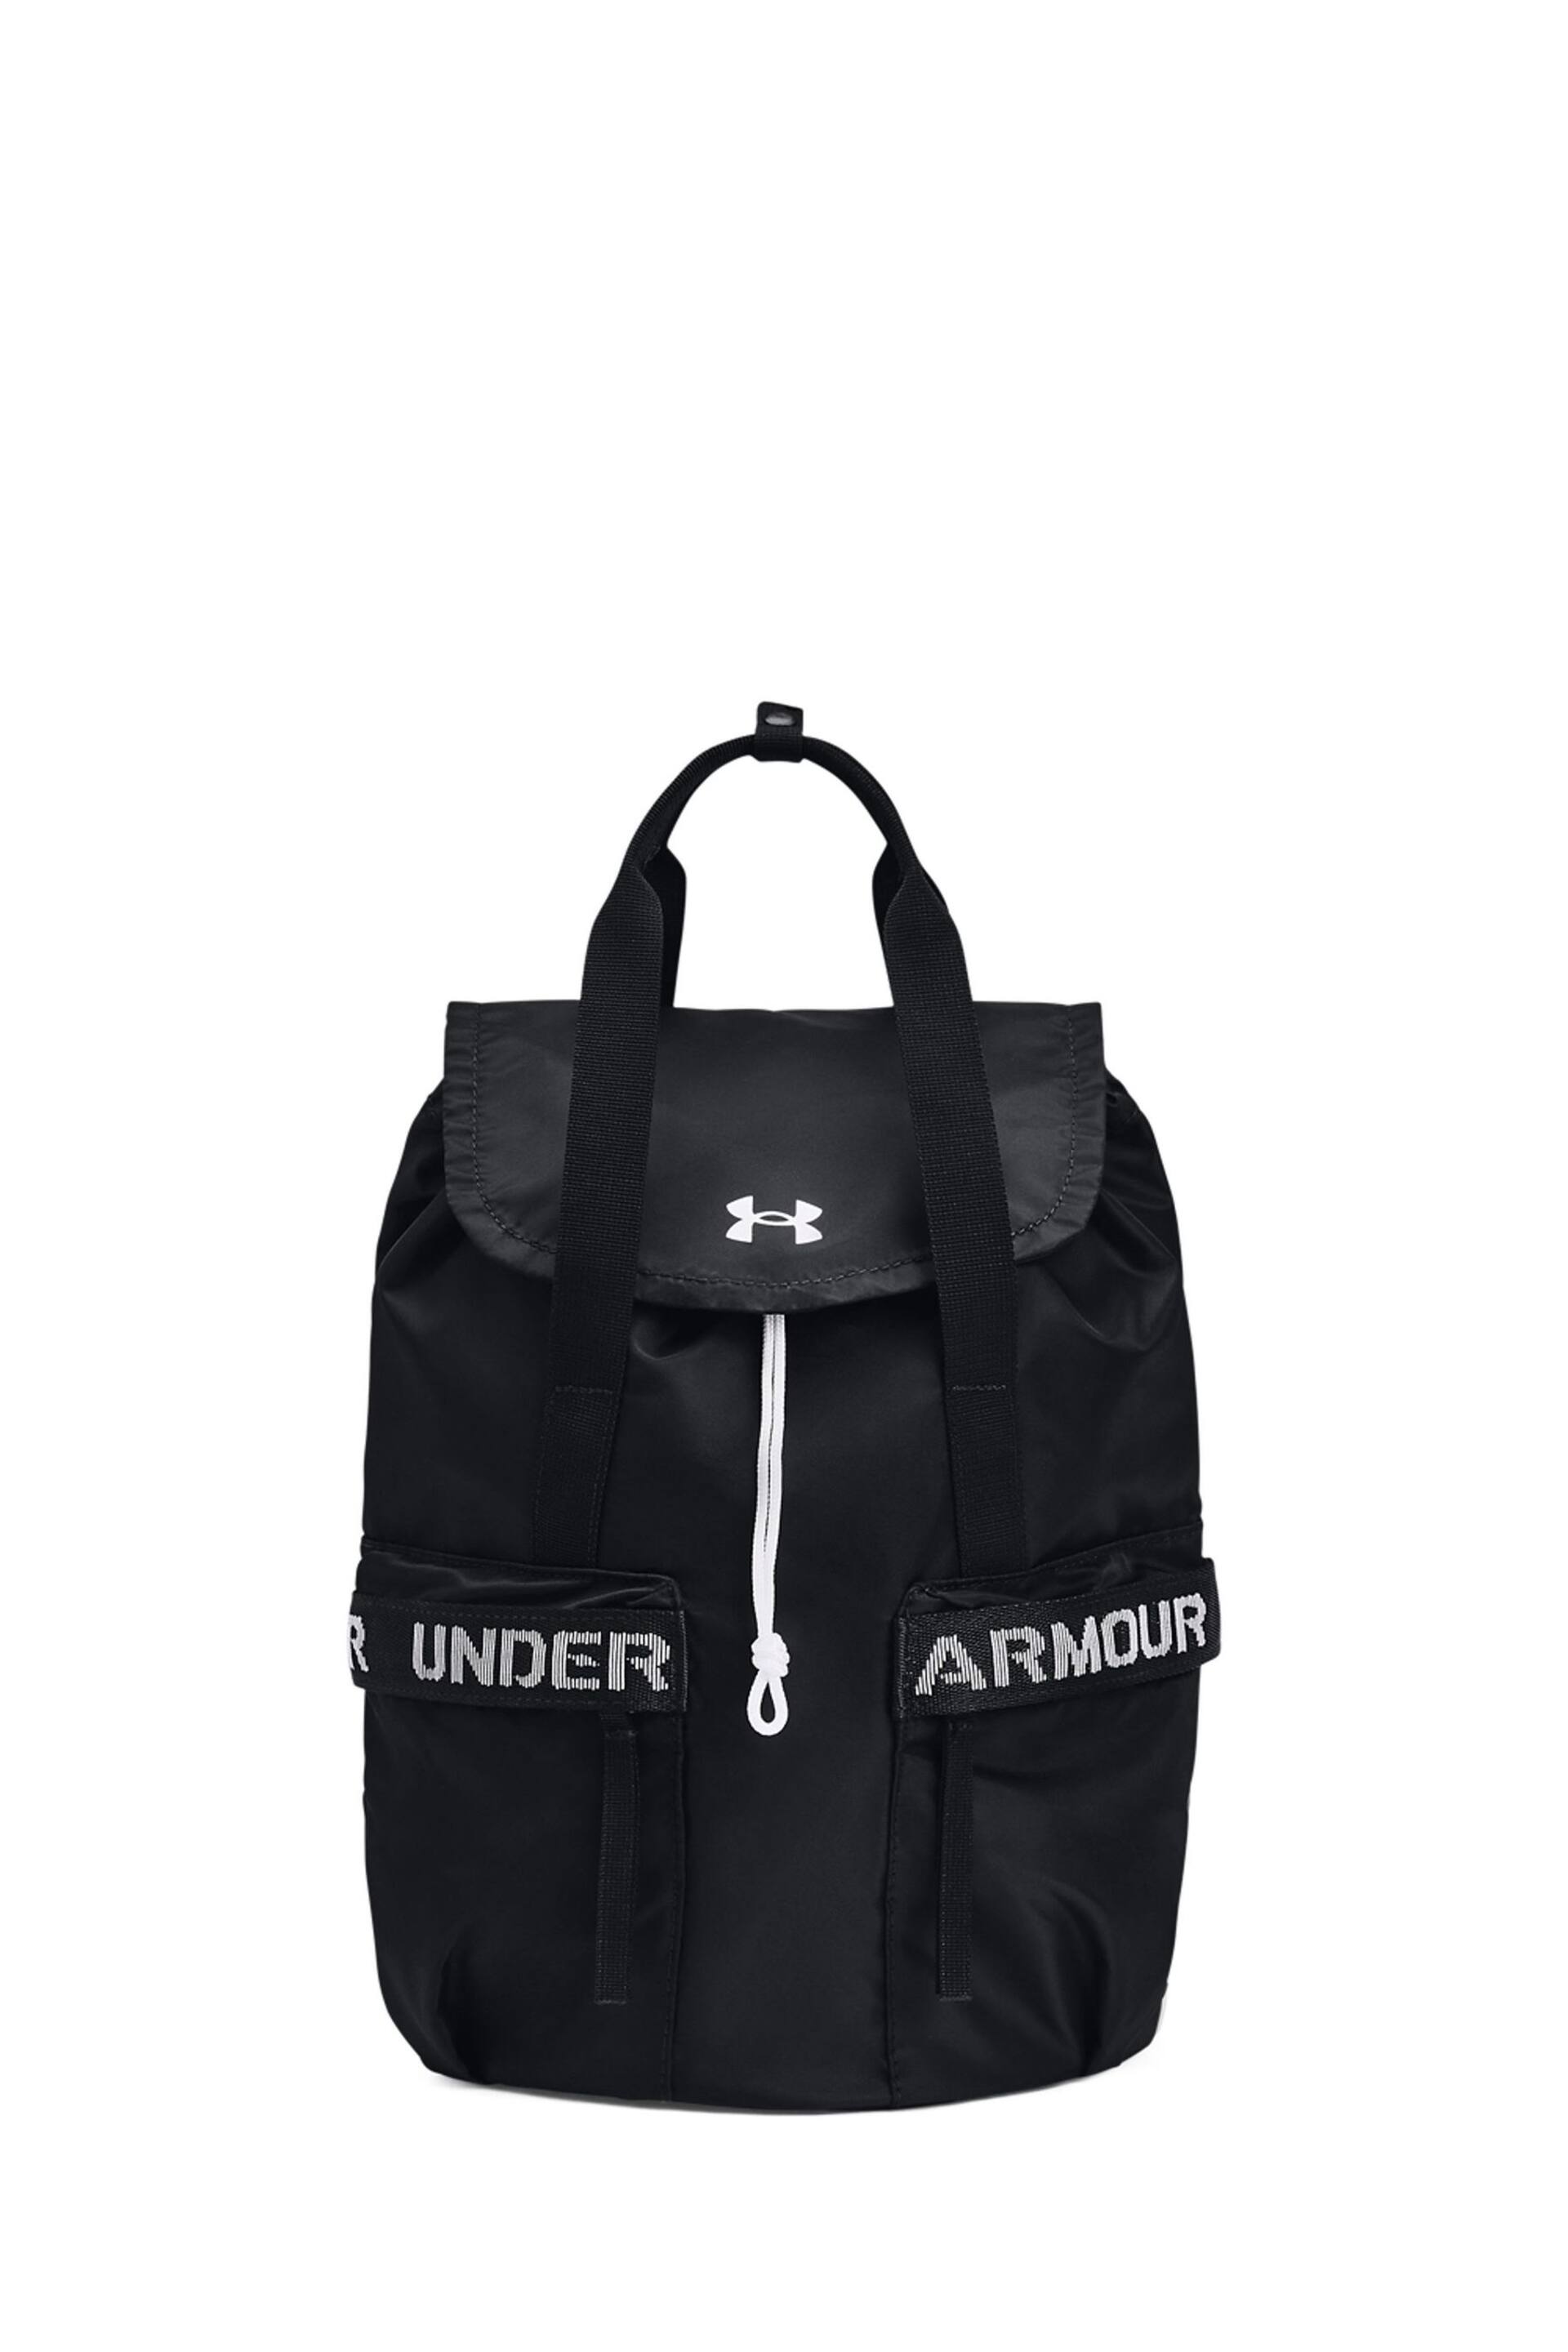 Under Armour Black Favorite Backpack - Image 2 of 5